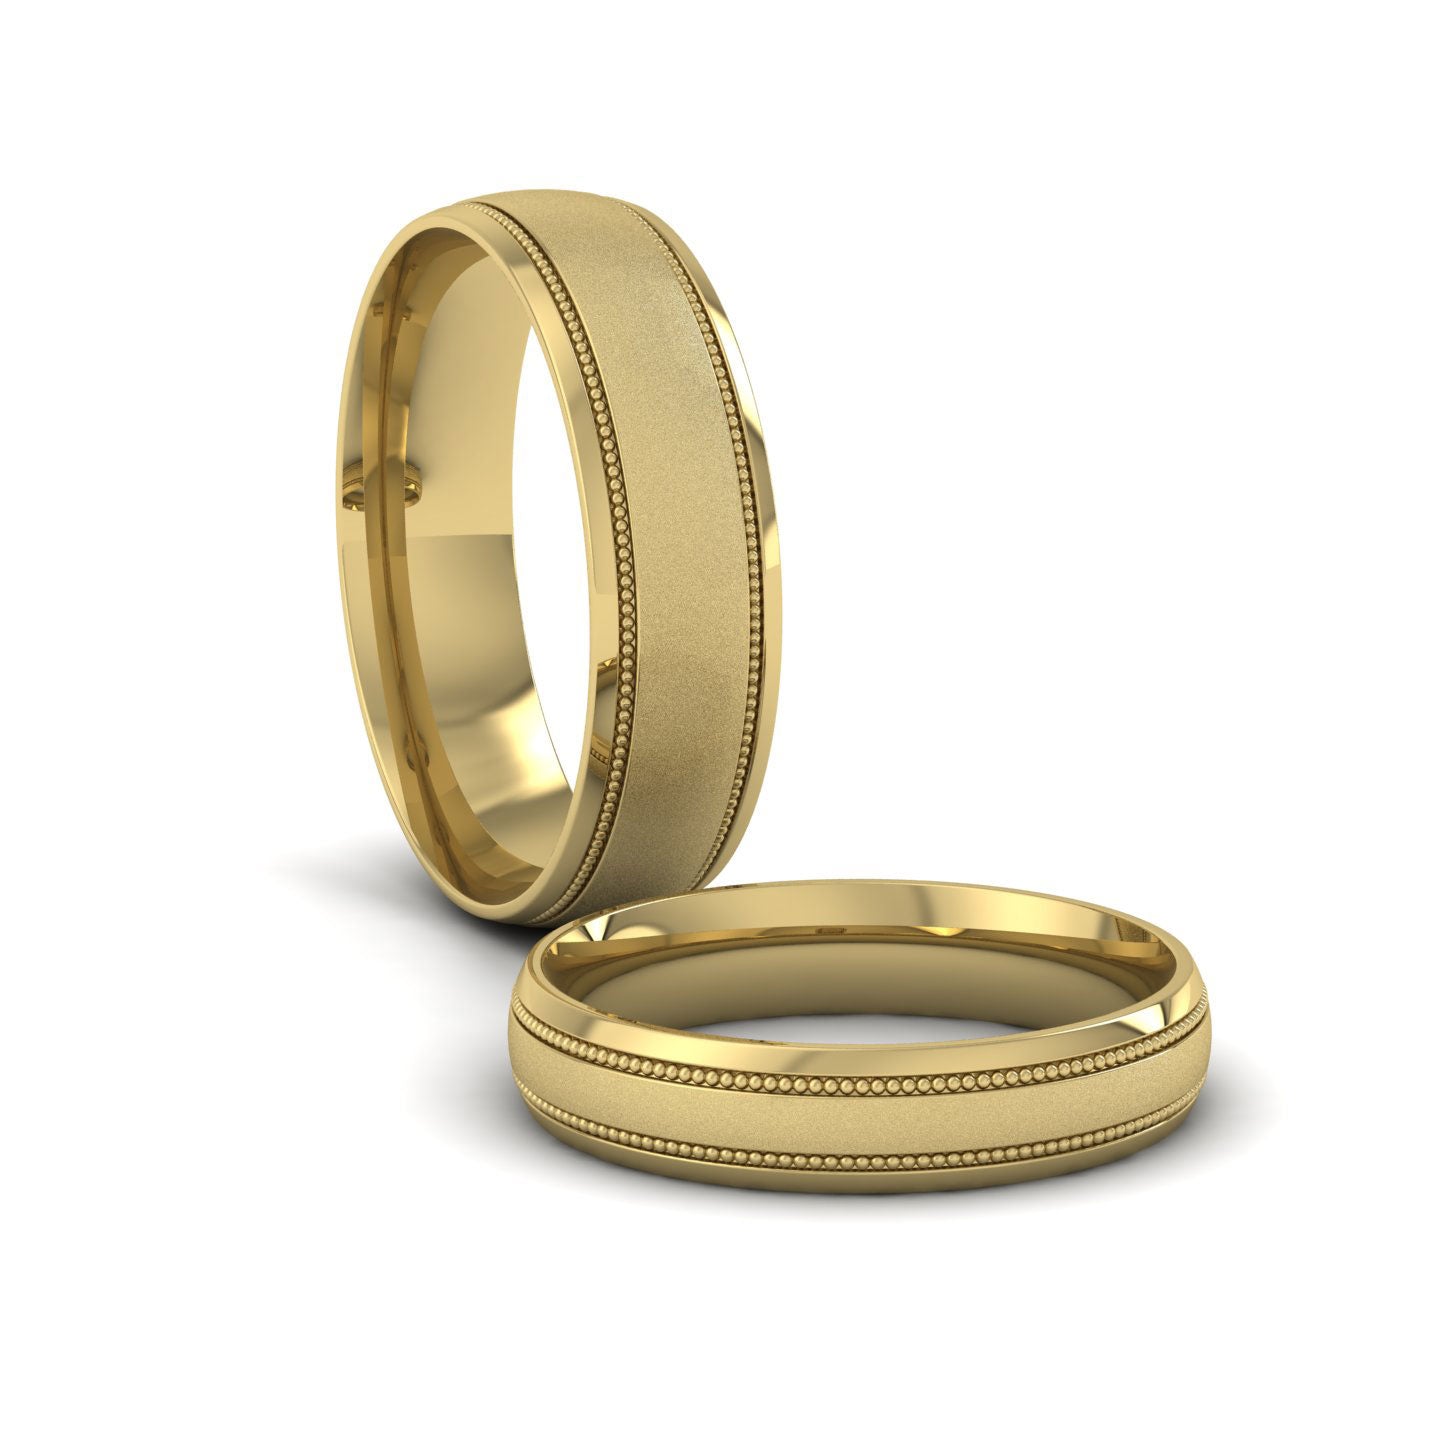 Millgrain And Contrasting Matt And Shiny Finish 22ct Yellow Gold 6mm Wedding Ring